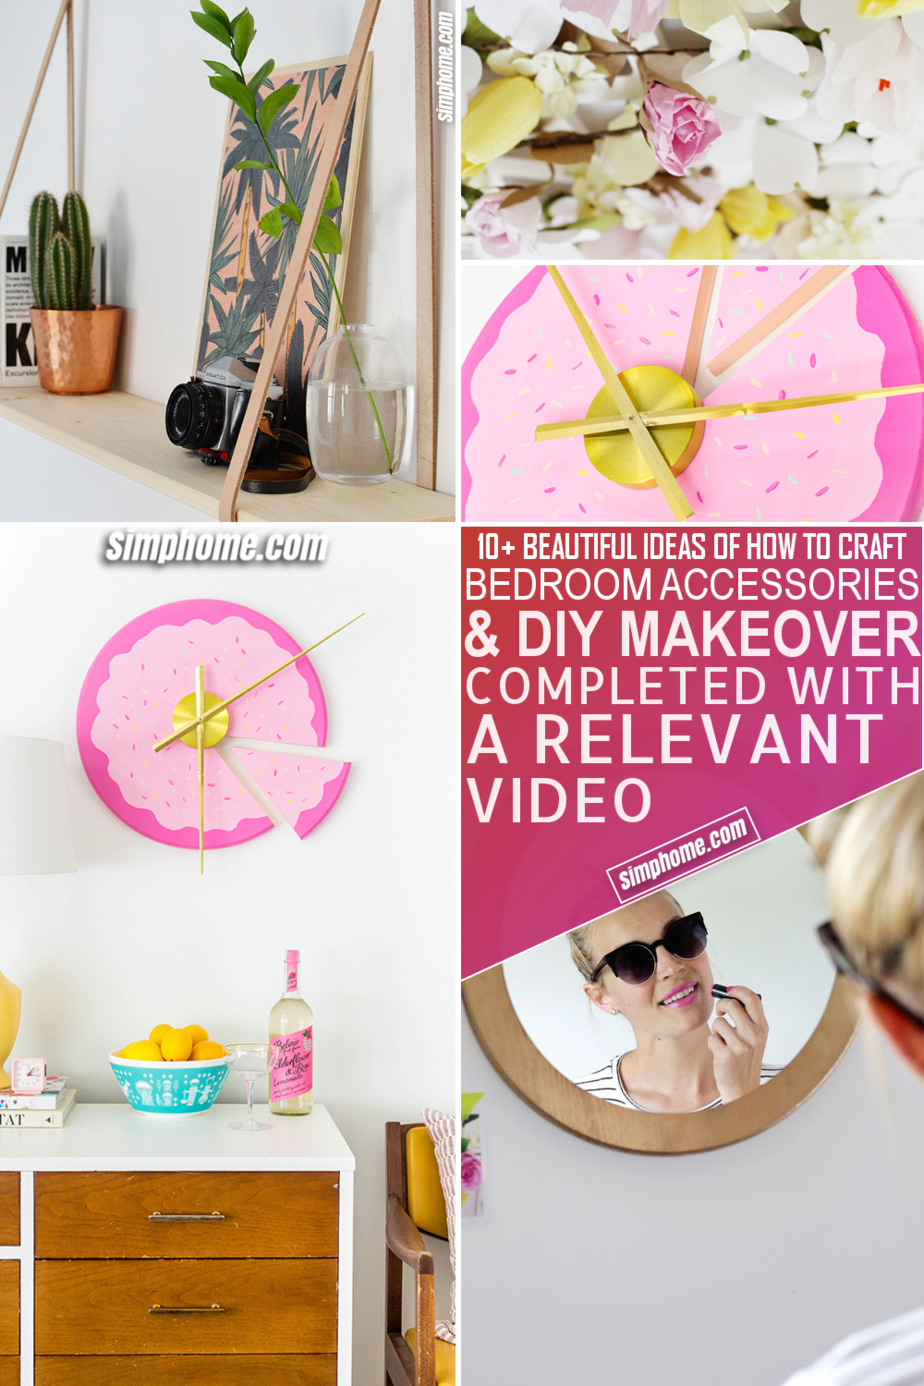 10 Bedroom Accessories Ideas via Simphome.com Featured Pinterest